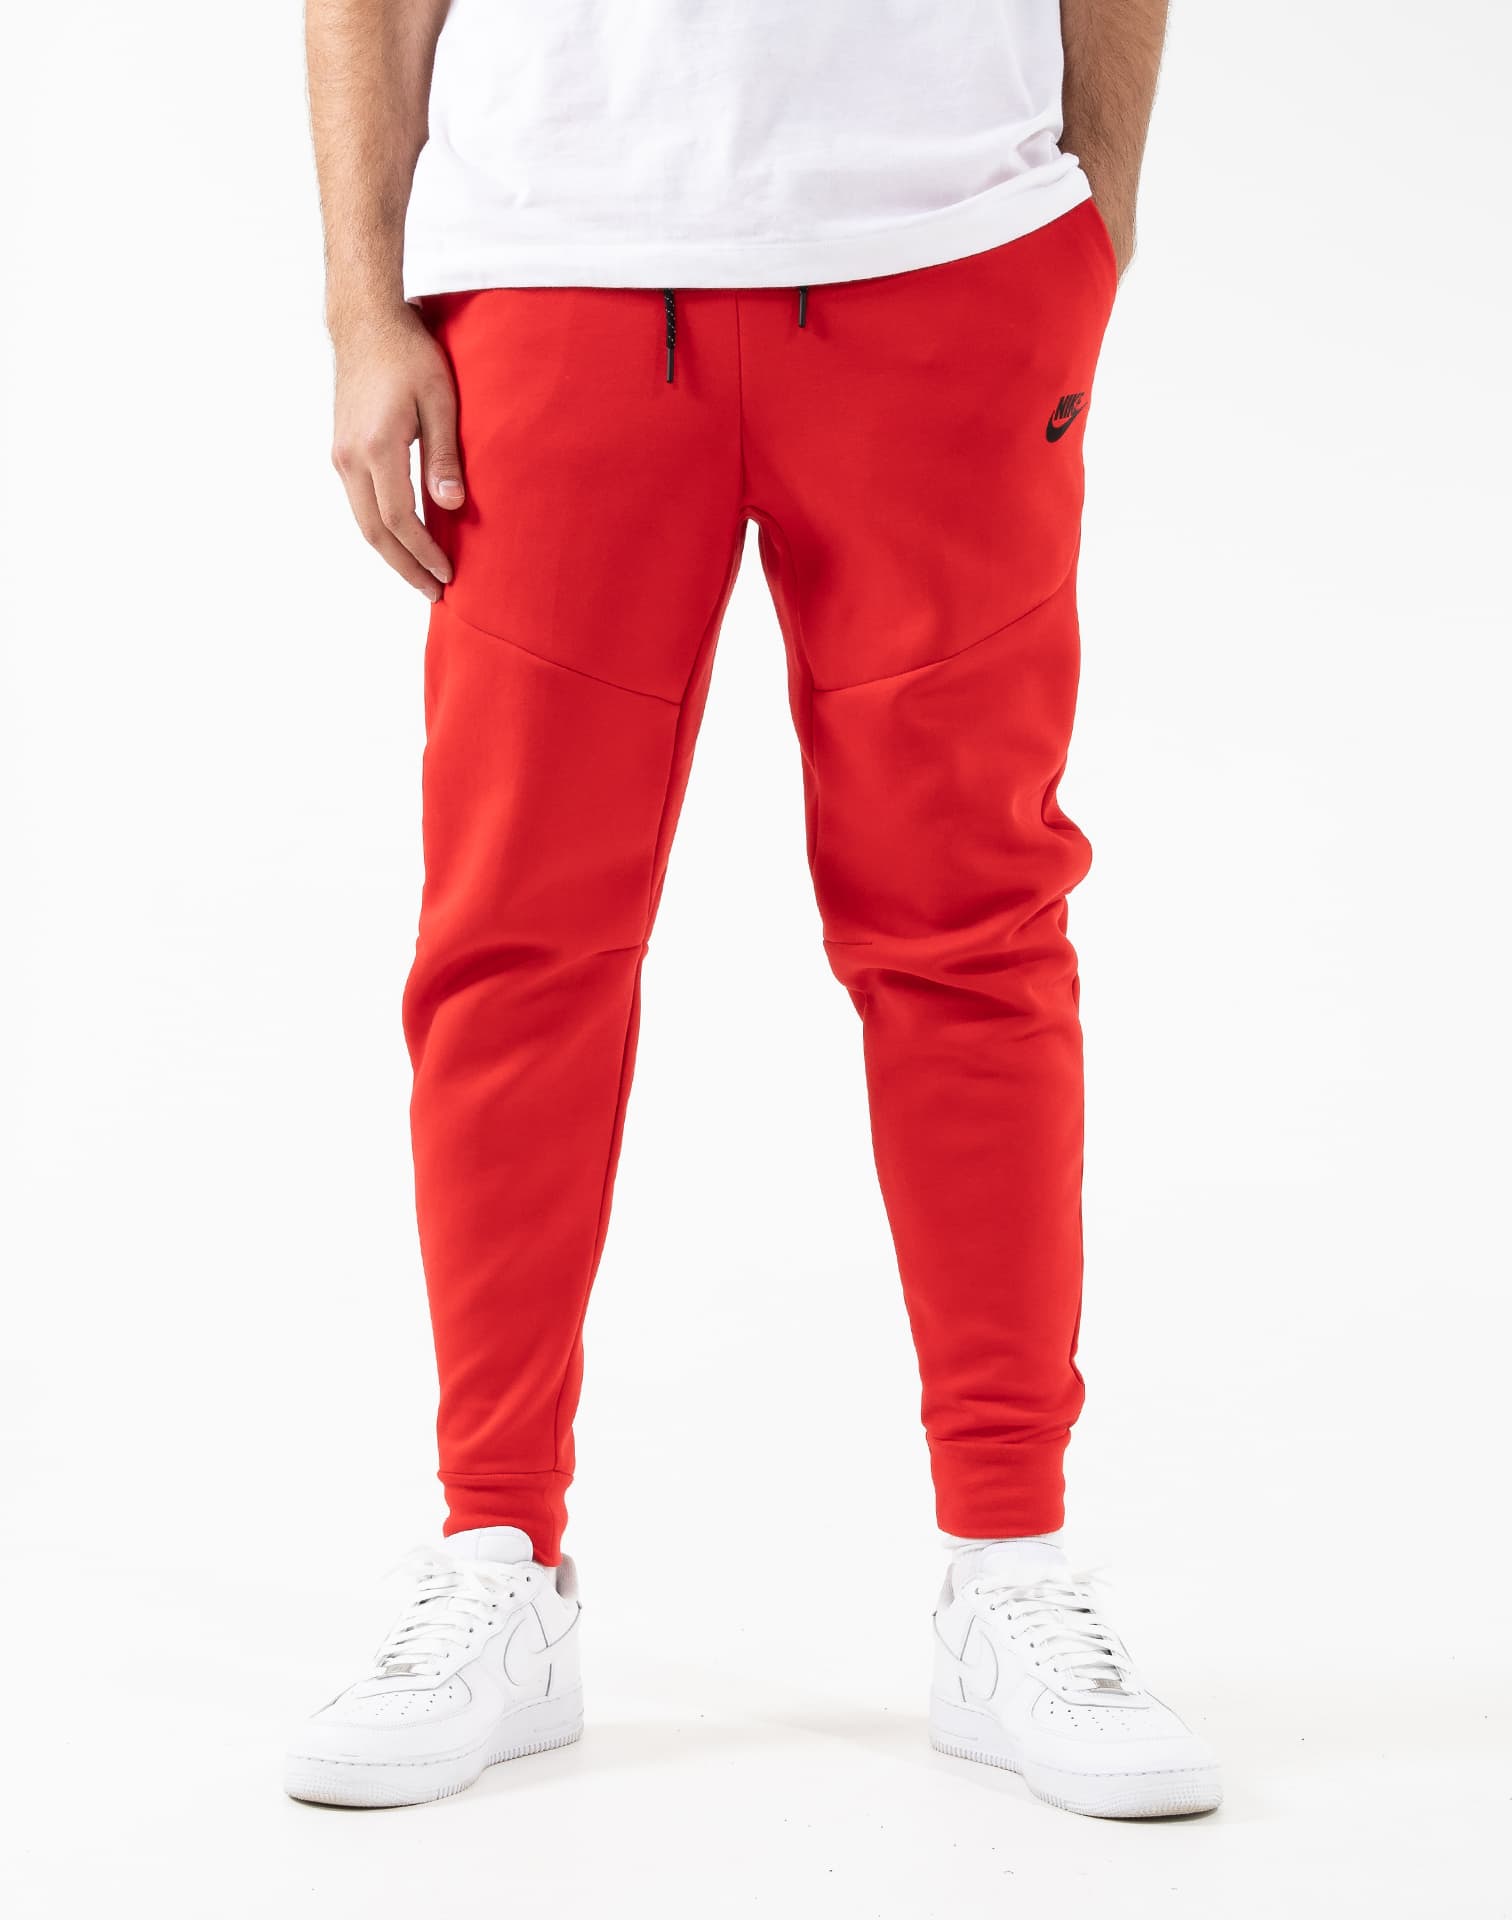 Nike Tech Fleece Taper Leg Pant Grey - Puffer Reds